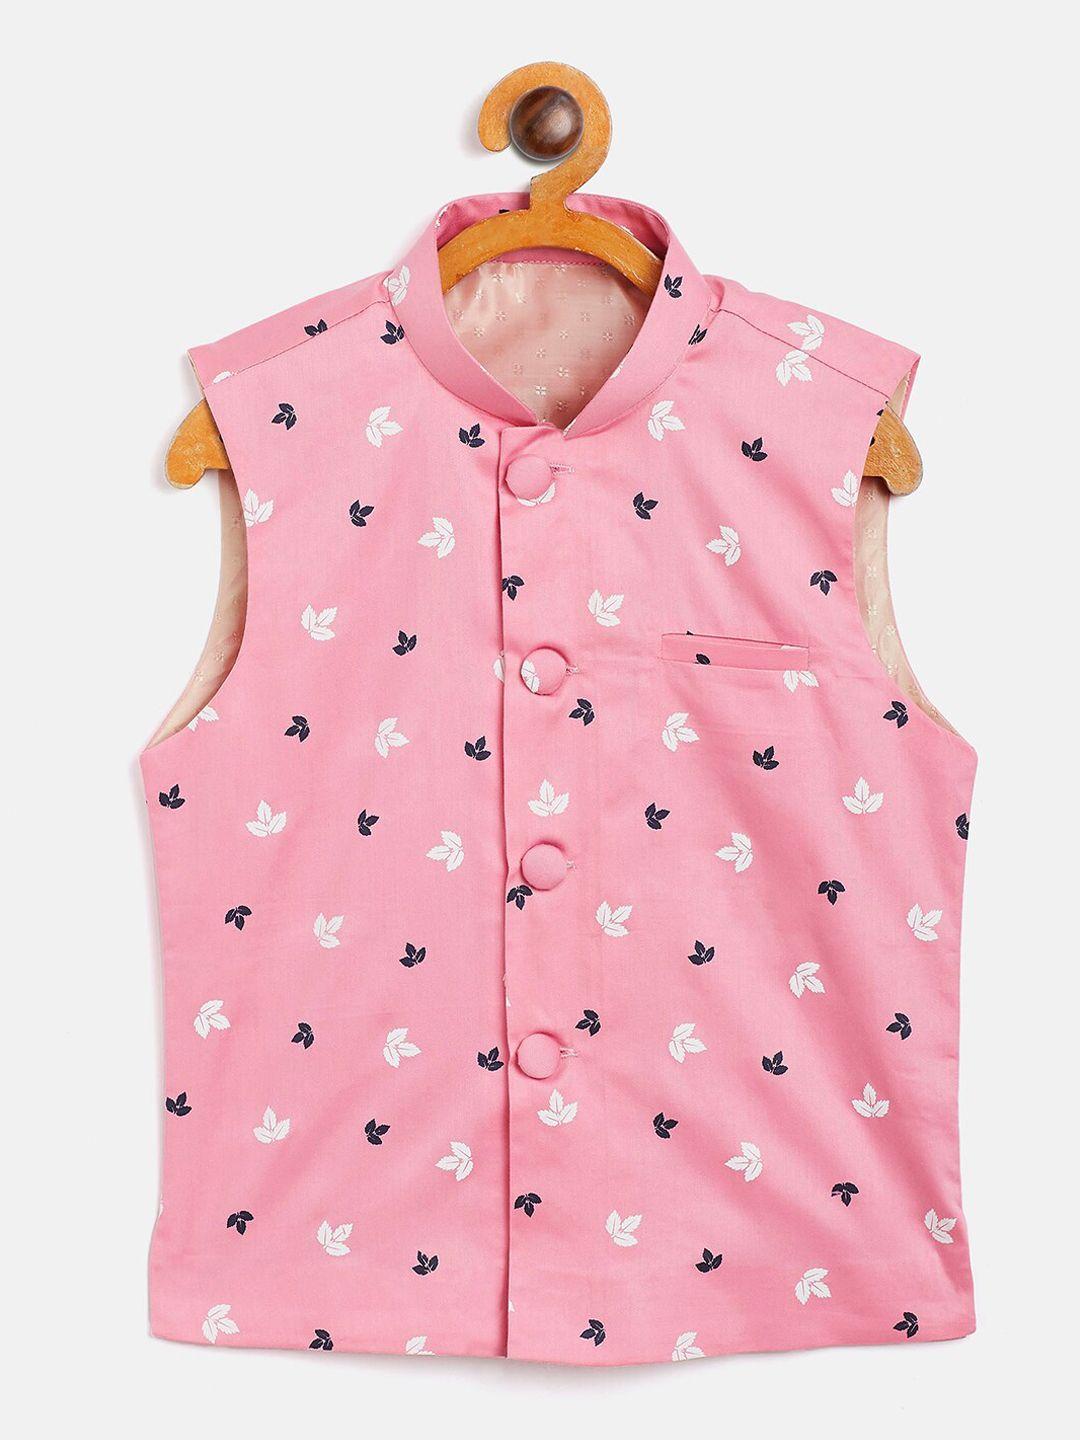 jbn creation boys pink & white printed slim fit nehru jacket